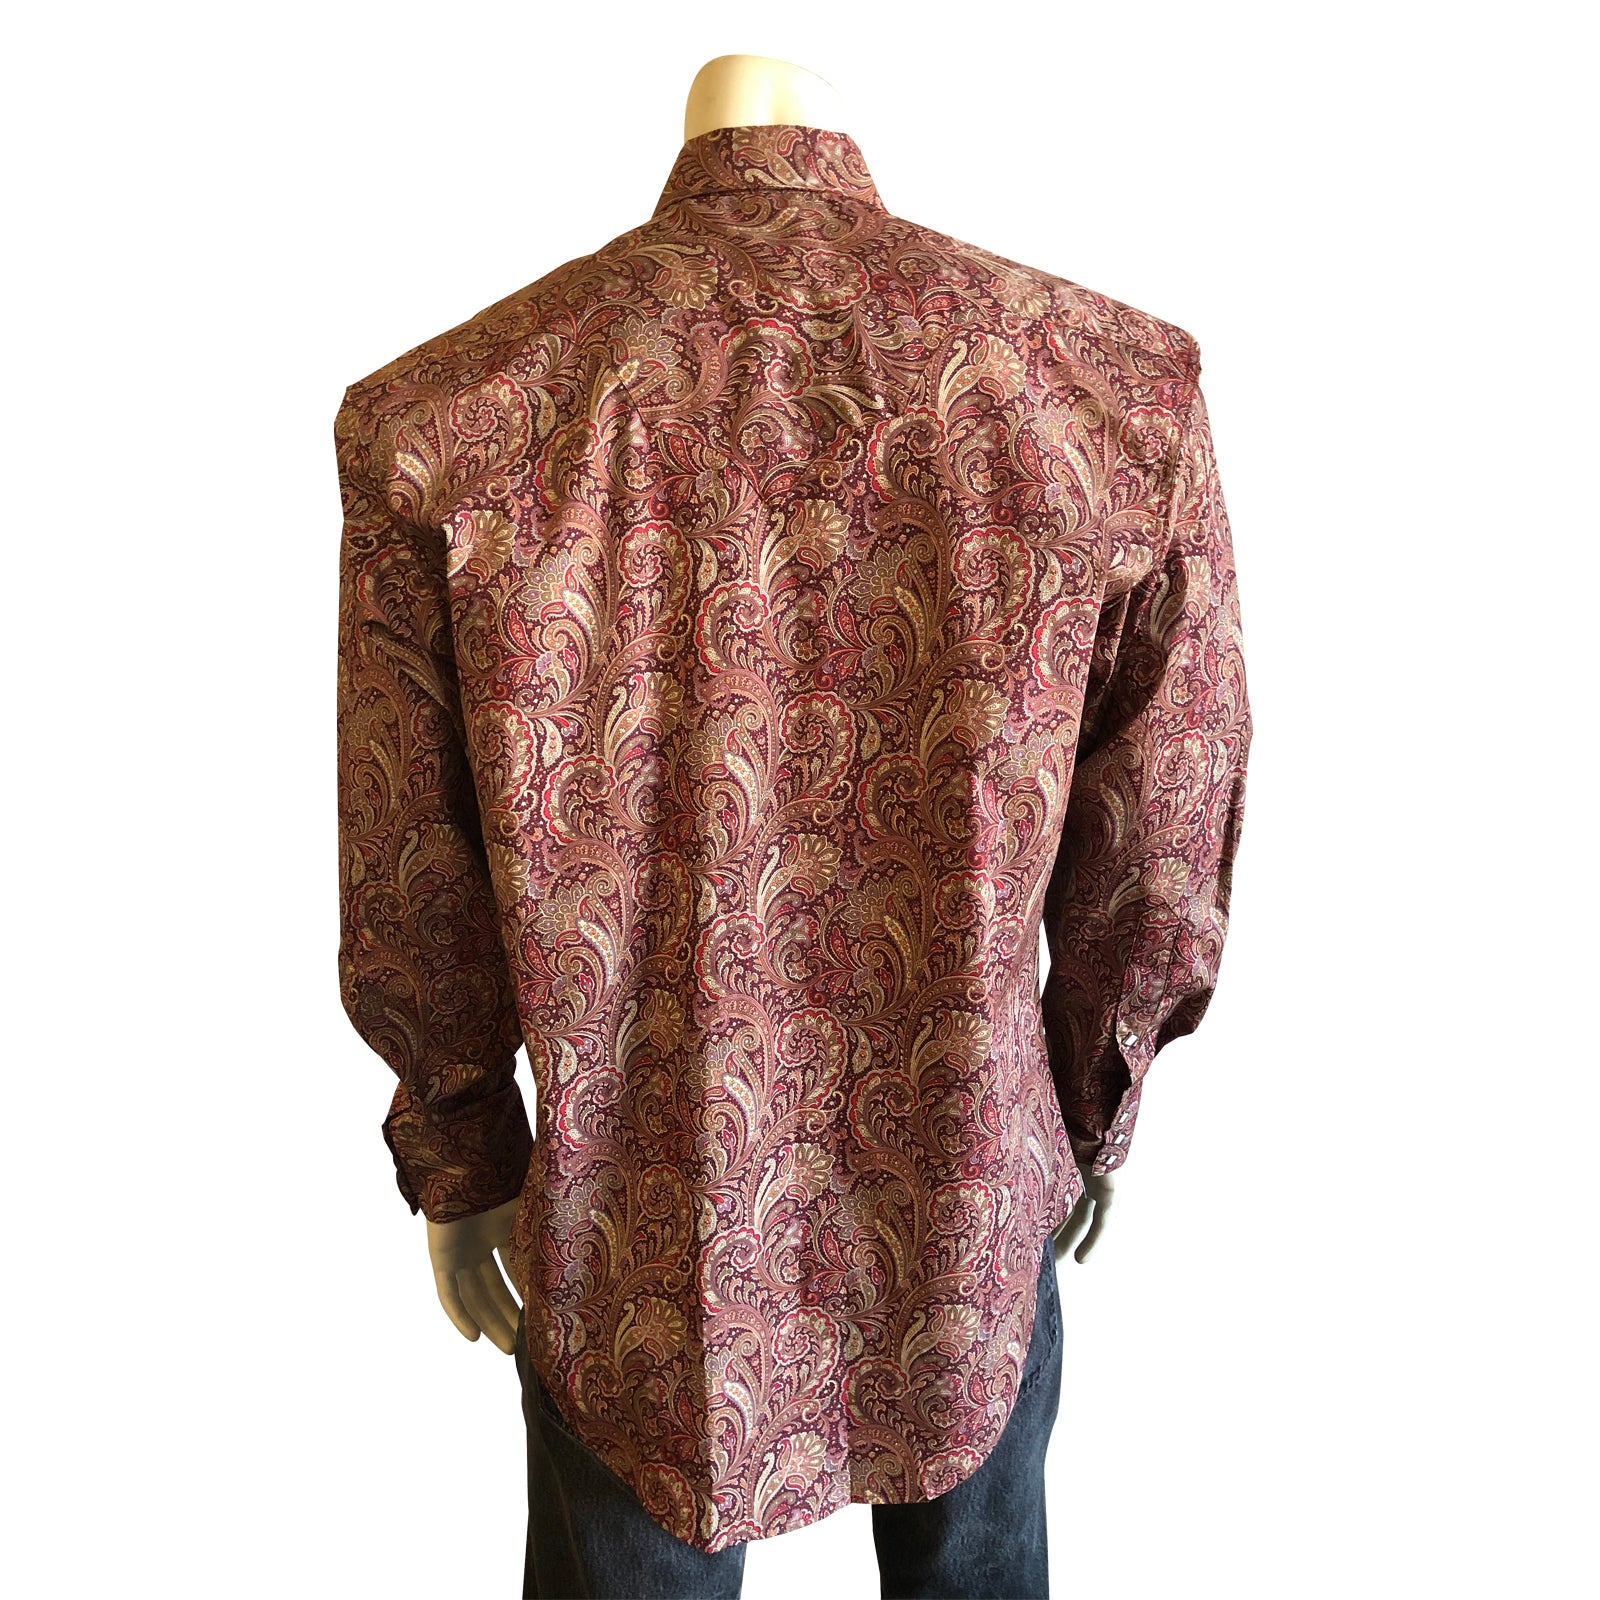 Men's Ornate Paisley Print Western Shirt in Burgundy - Rockmount